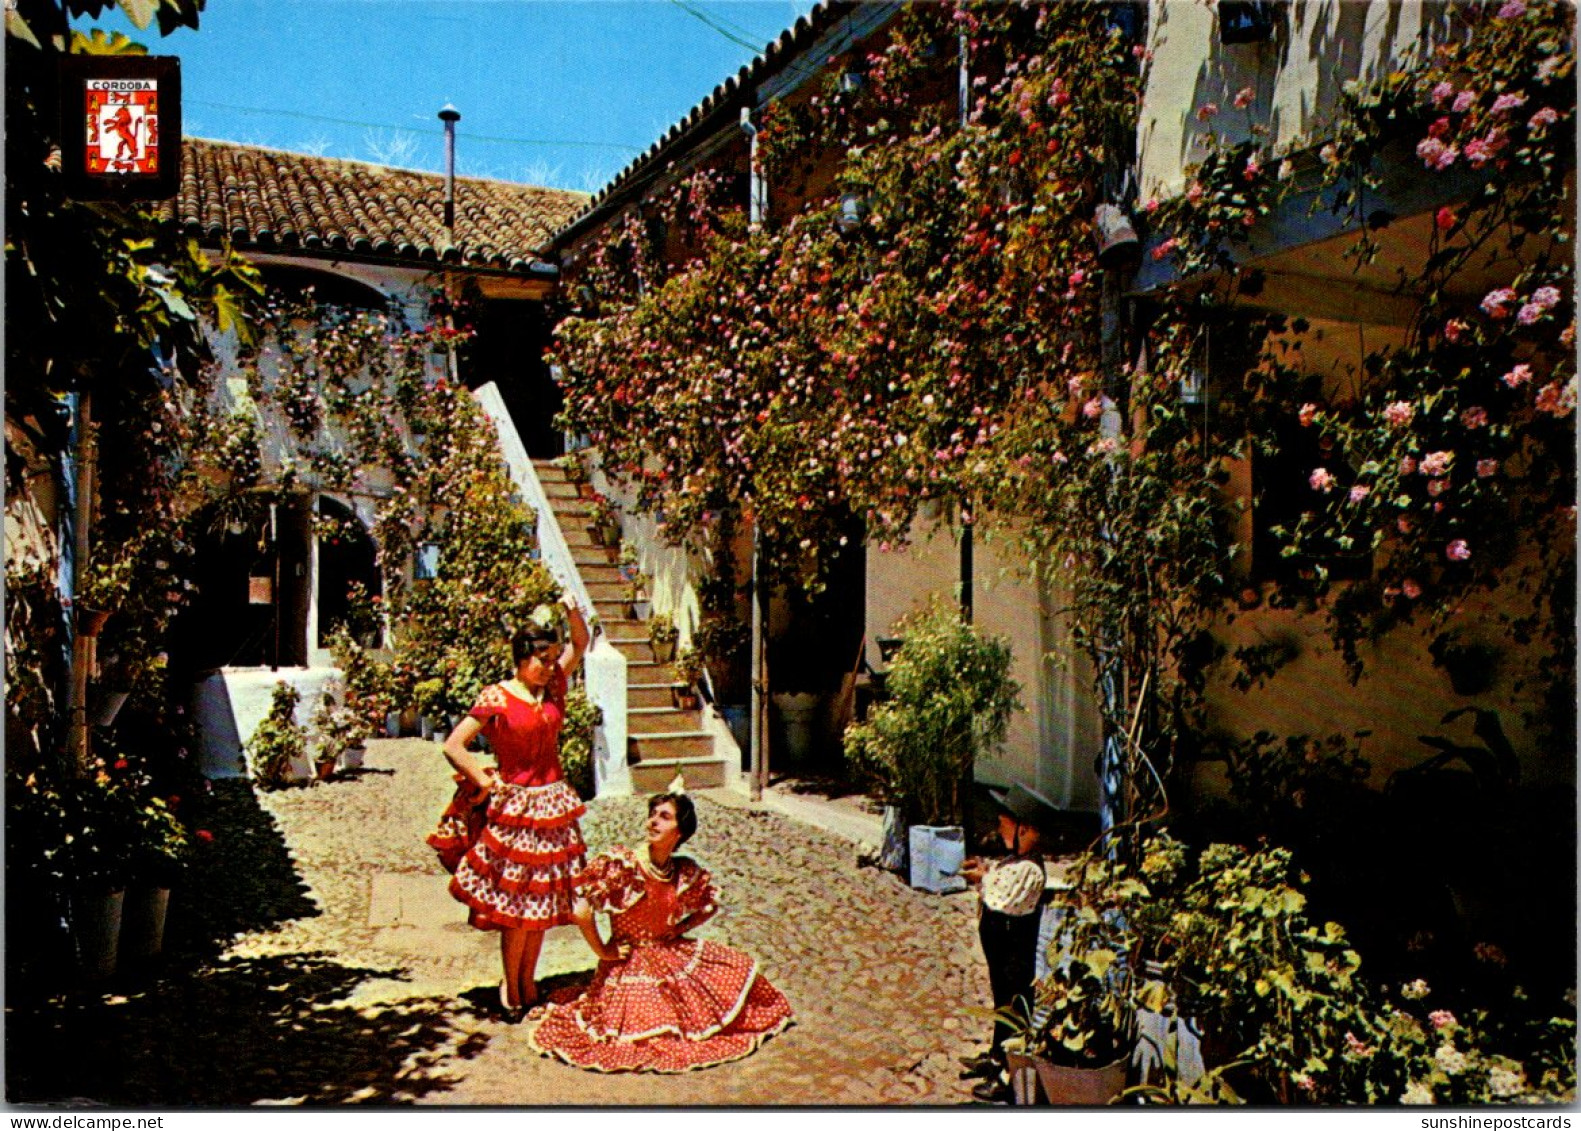 Spain Cordoba Courtyard With Locals In Traditional Dress  - Córdoba